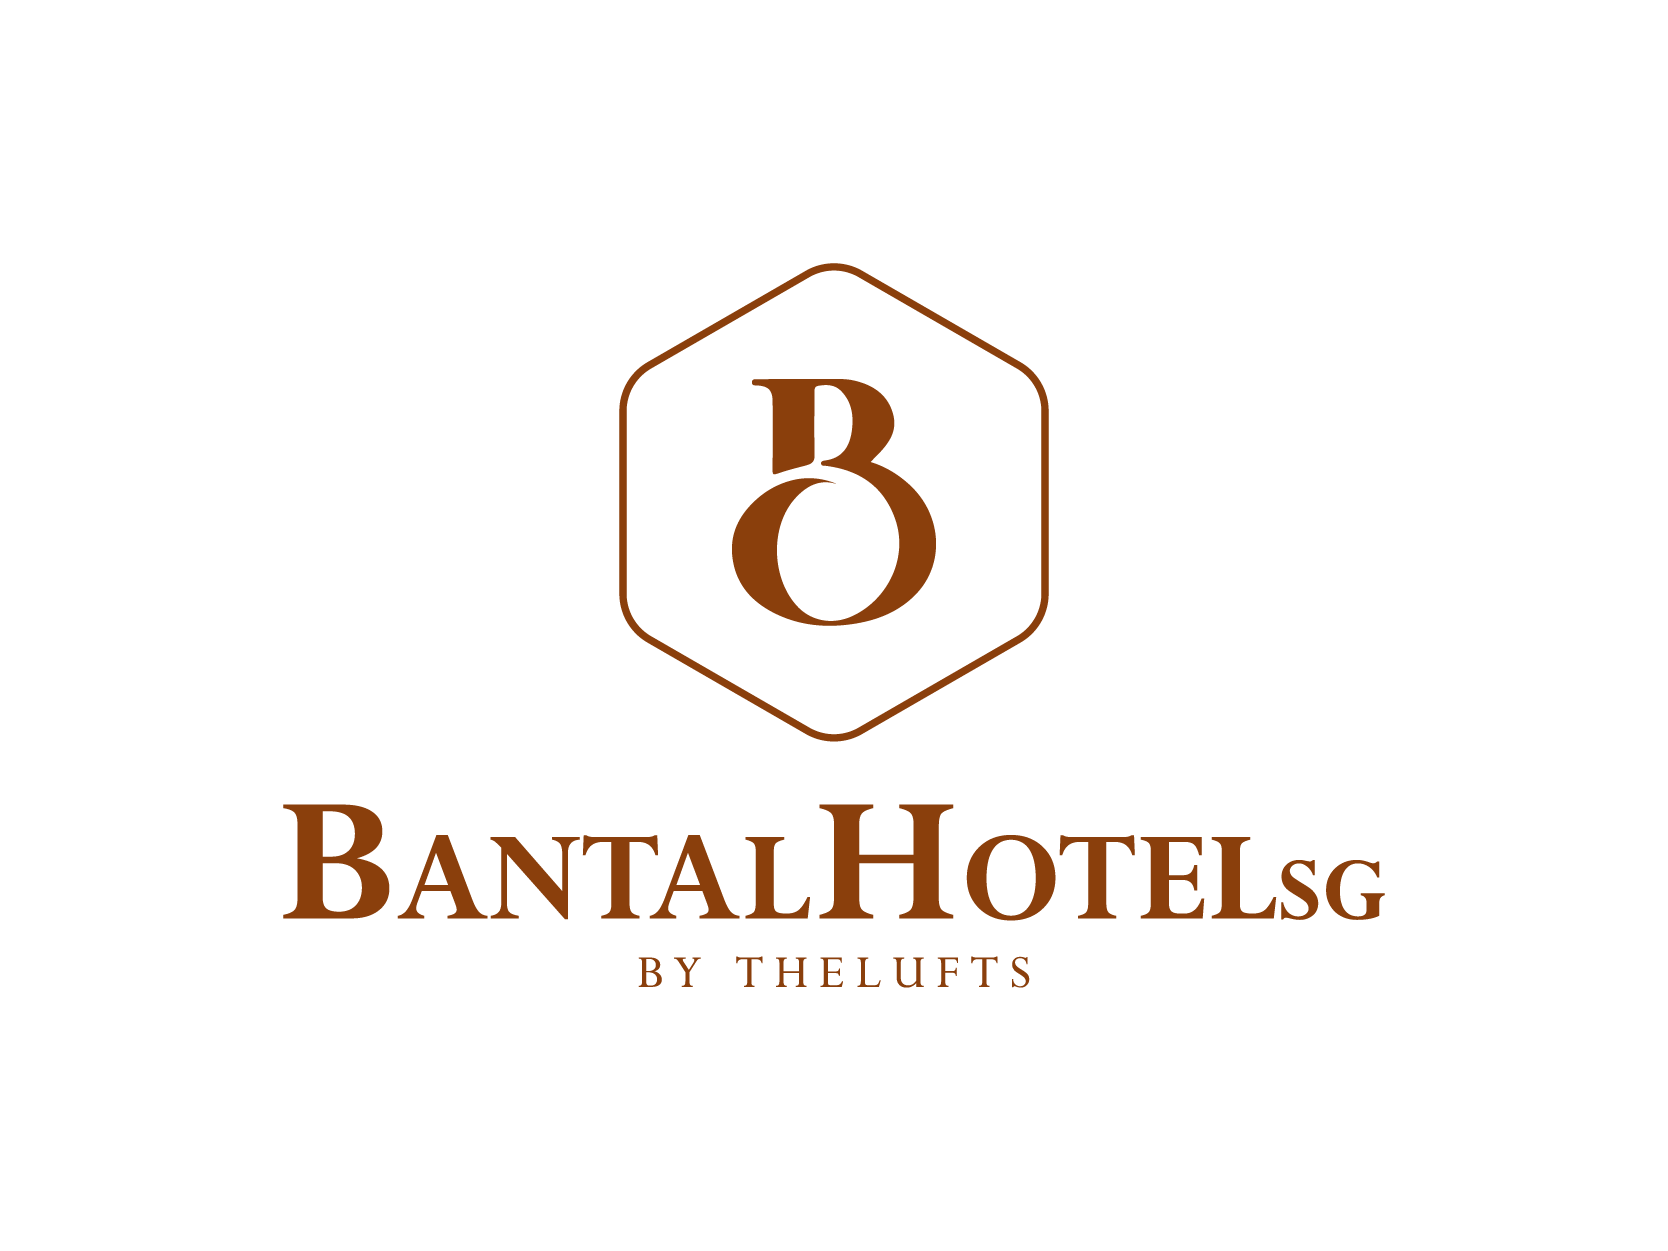  Bantal Hotel SG Logo Design